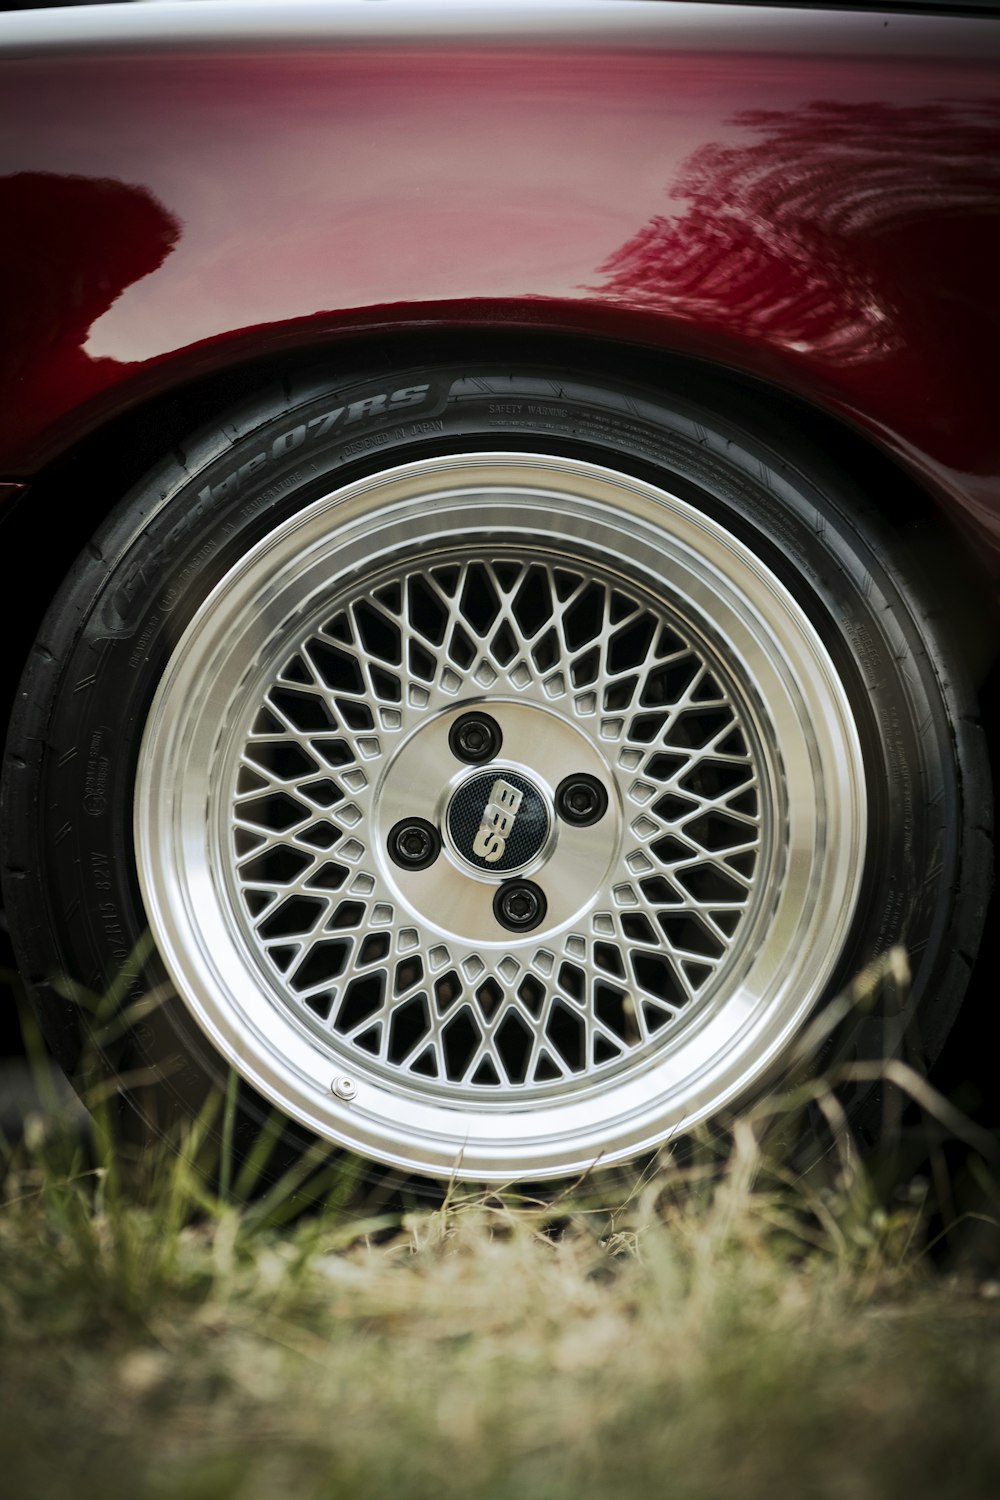 a close up of a car's wheel